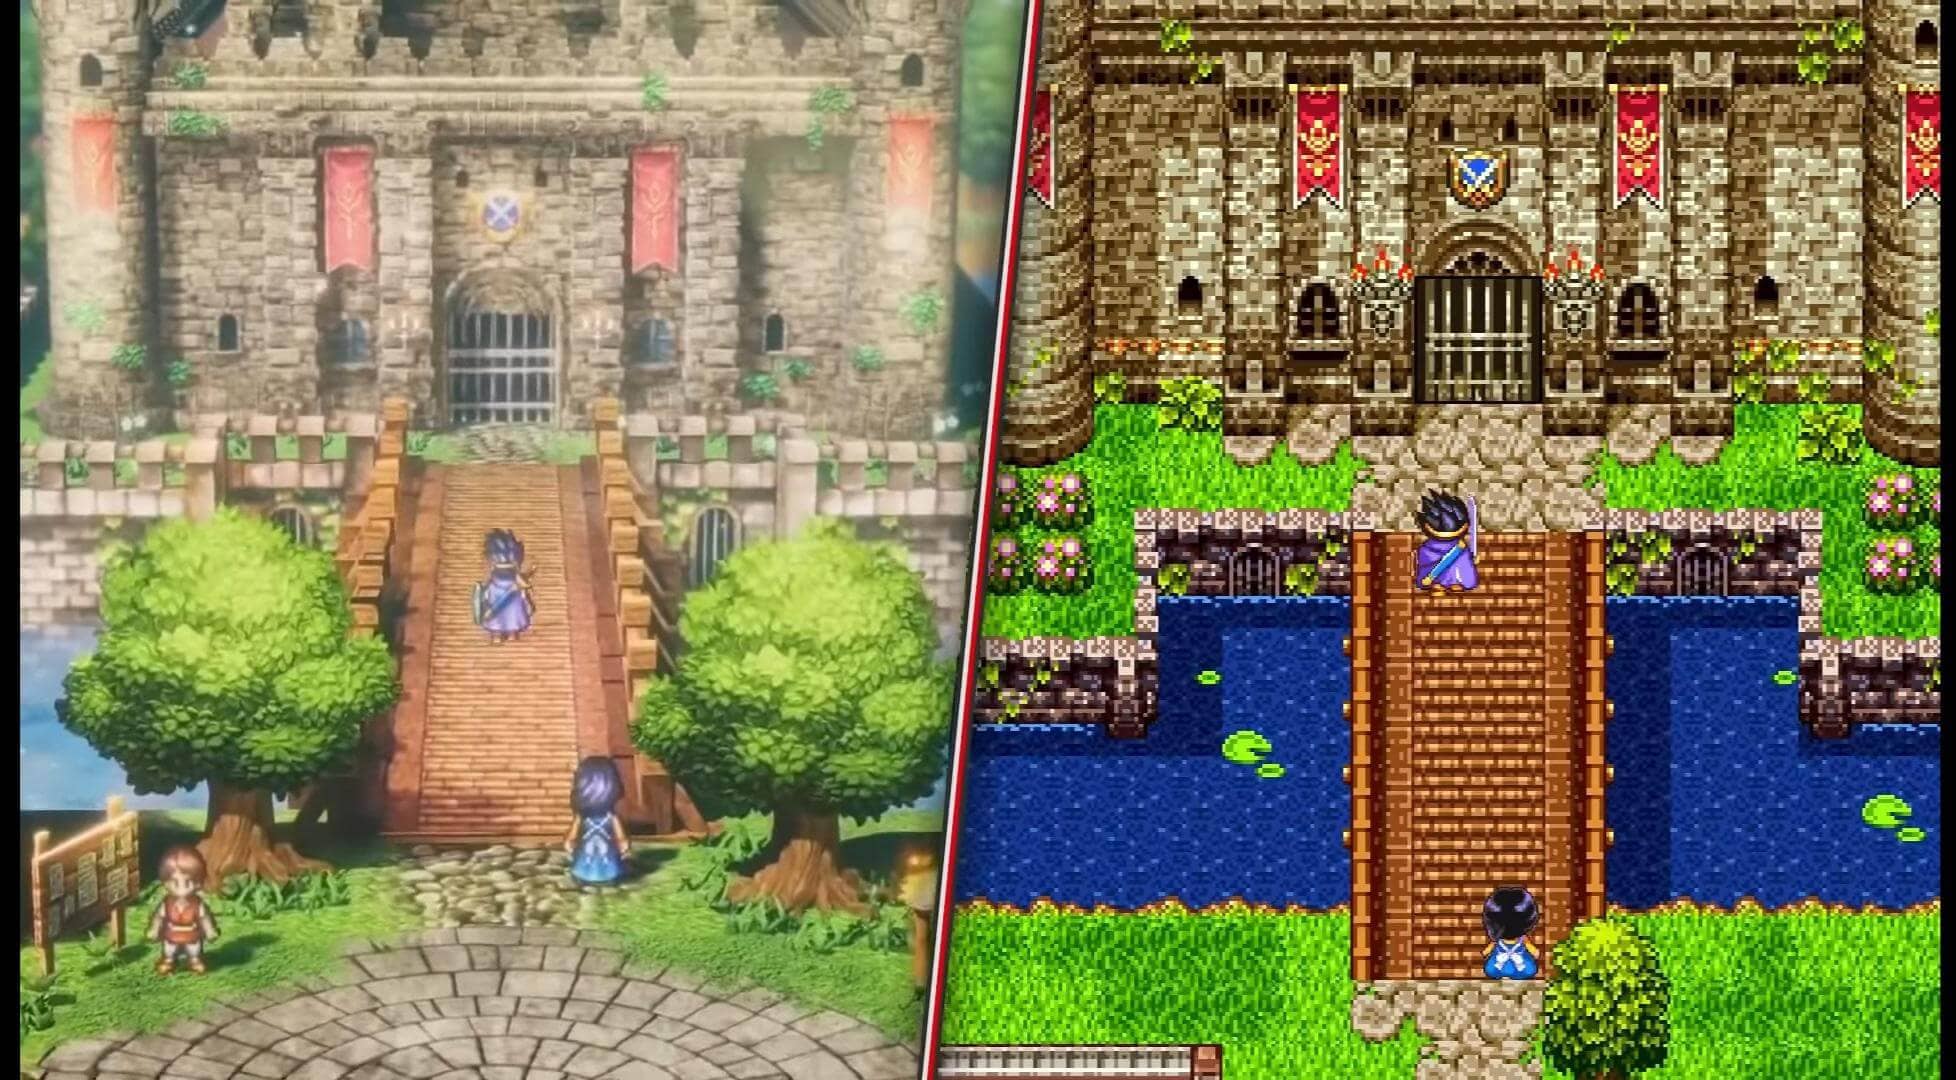 Seeing Dragon Quest 3 return is a sublime feeling | Source: retroanduwu24 (Reddit)